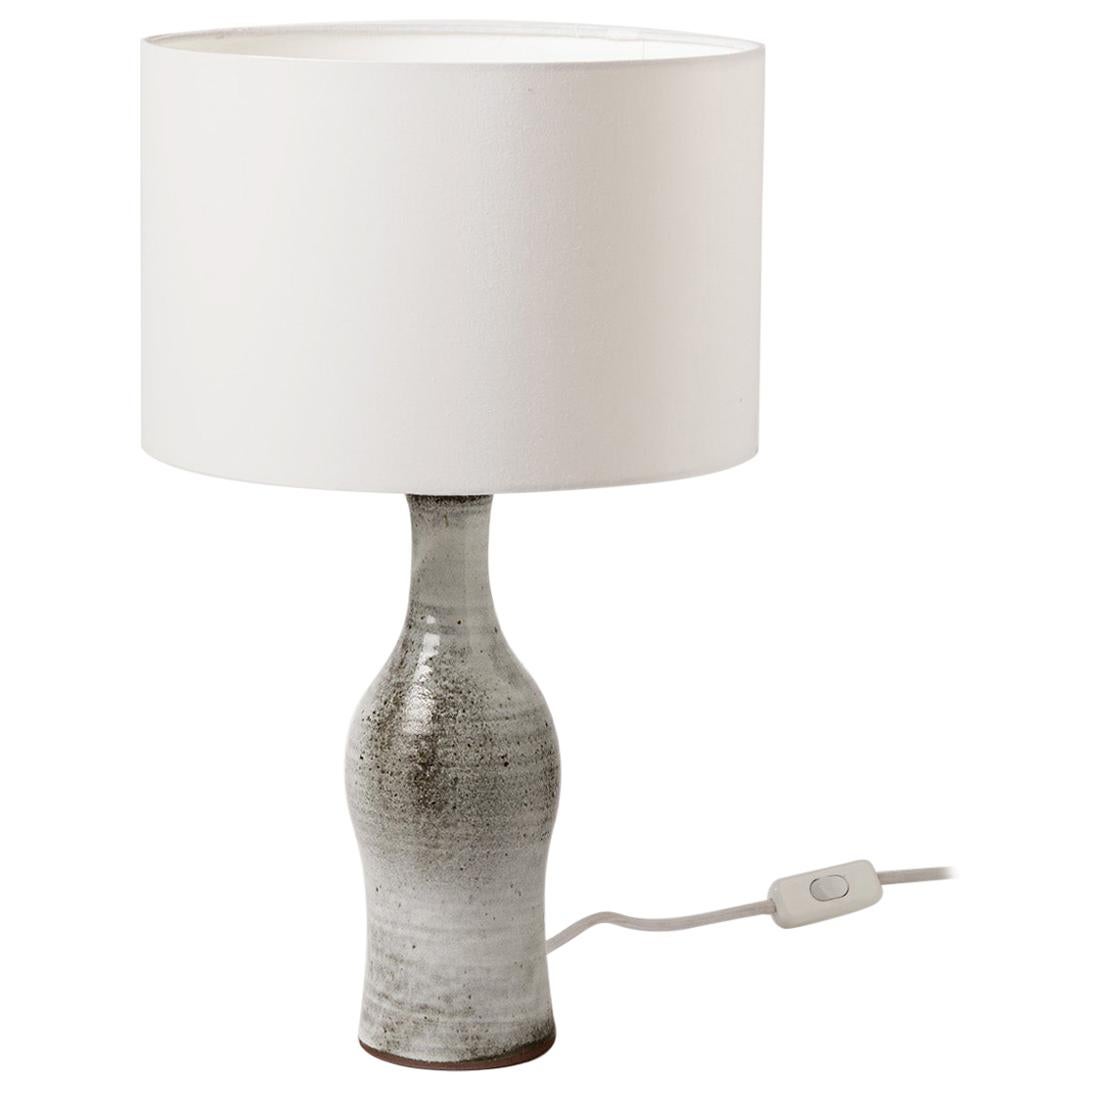 Norbert Pierlot circa 1950 Elegant White and Grey Ceramic Table Lamp Design